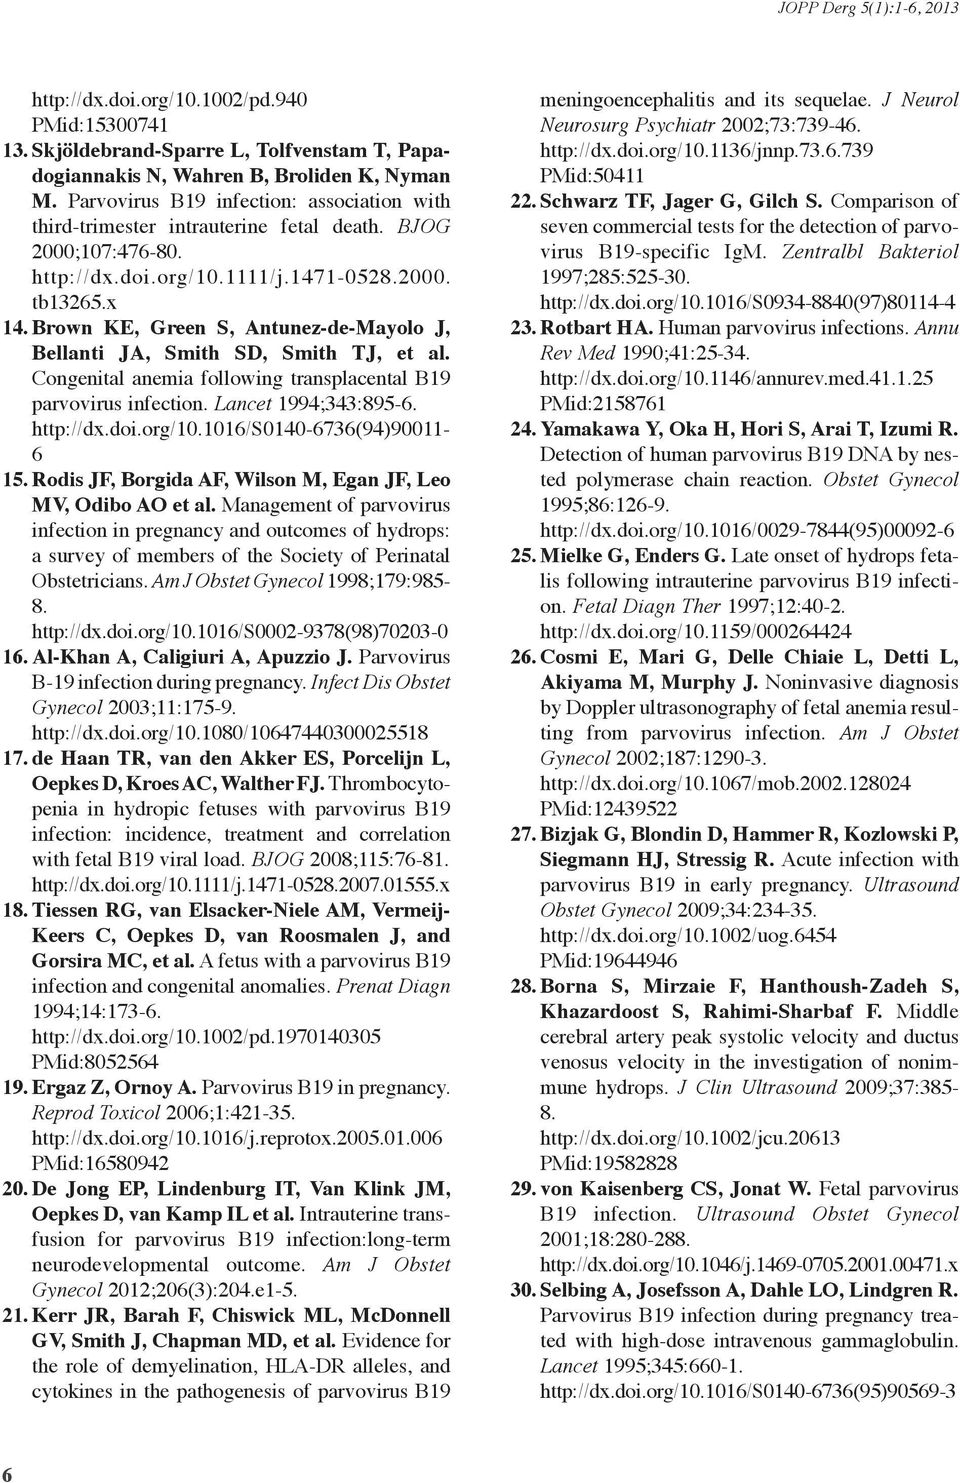 Brown KE, Green S, Antunez-de-Mayolo J, Bellanti JA, Smith SD, Smith TJ, et al. Congenital anemia following transplacental B19 parvovirus infection. Lancet 1994;343:895-6. http://dx.doi.org/10.